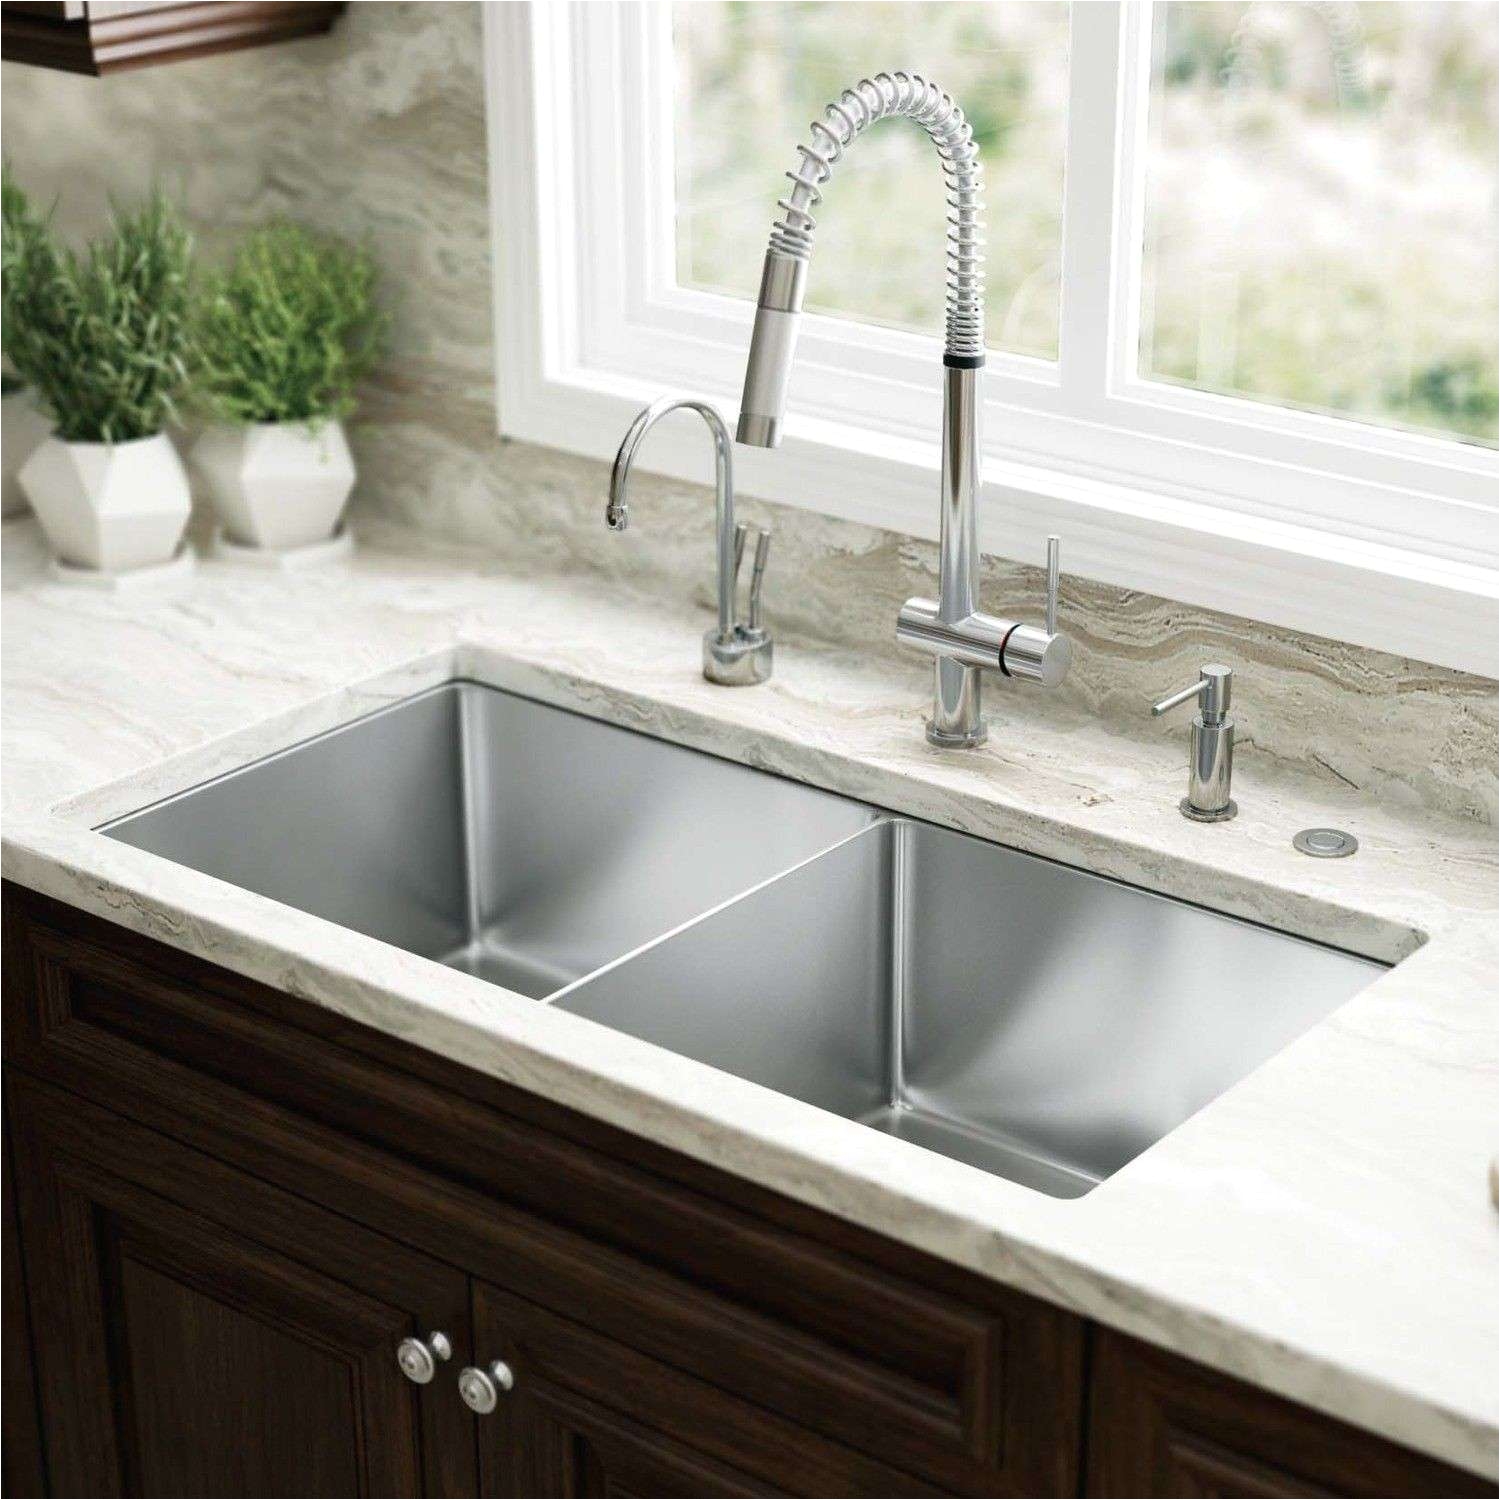 deep kitchen cabinets lovely sink deep kitchen sinks cast ironi 0d design ideas lowes kitchen